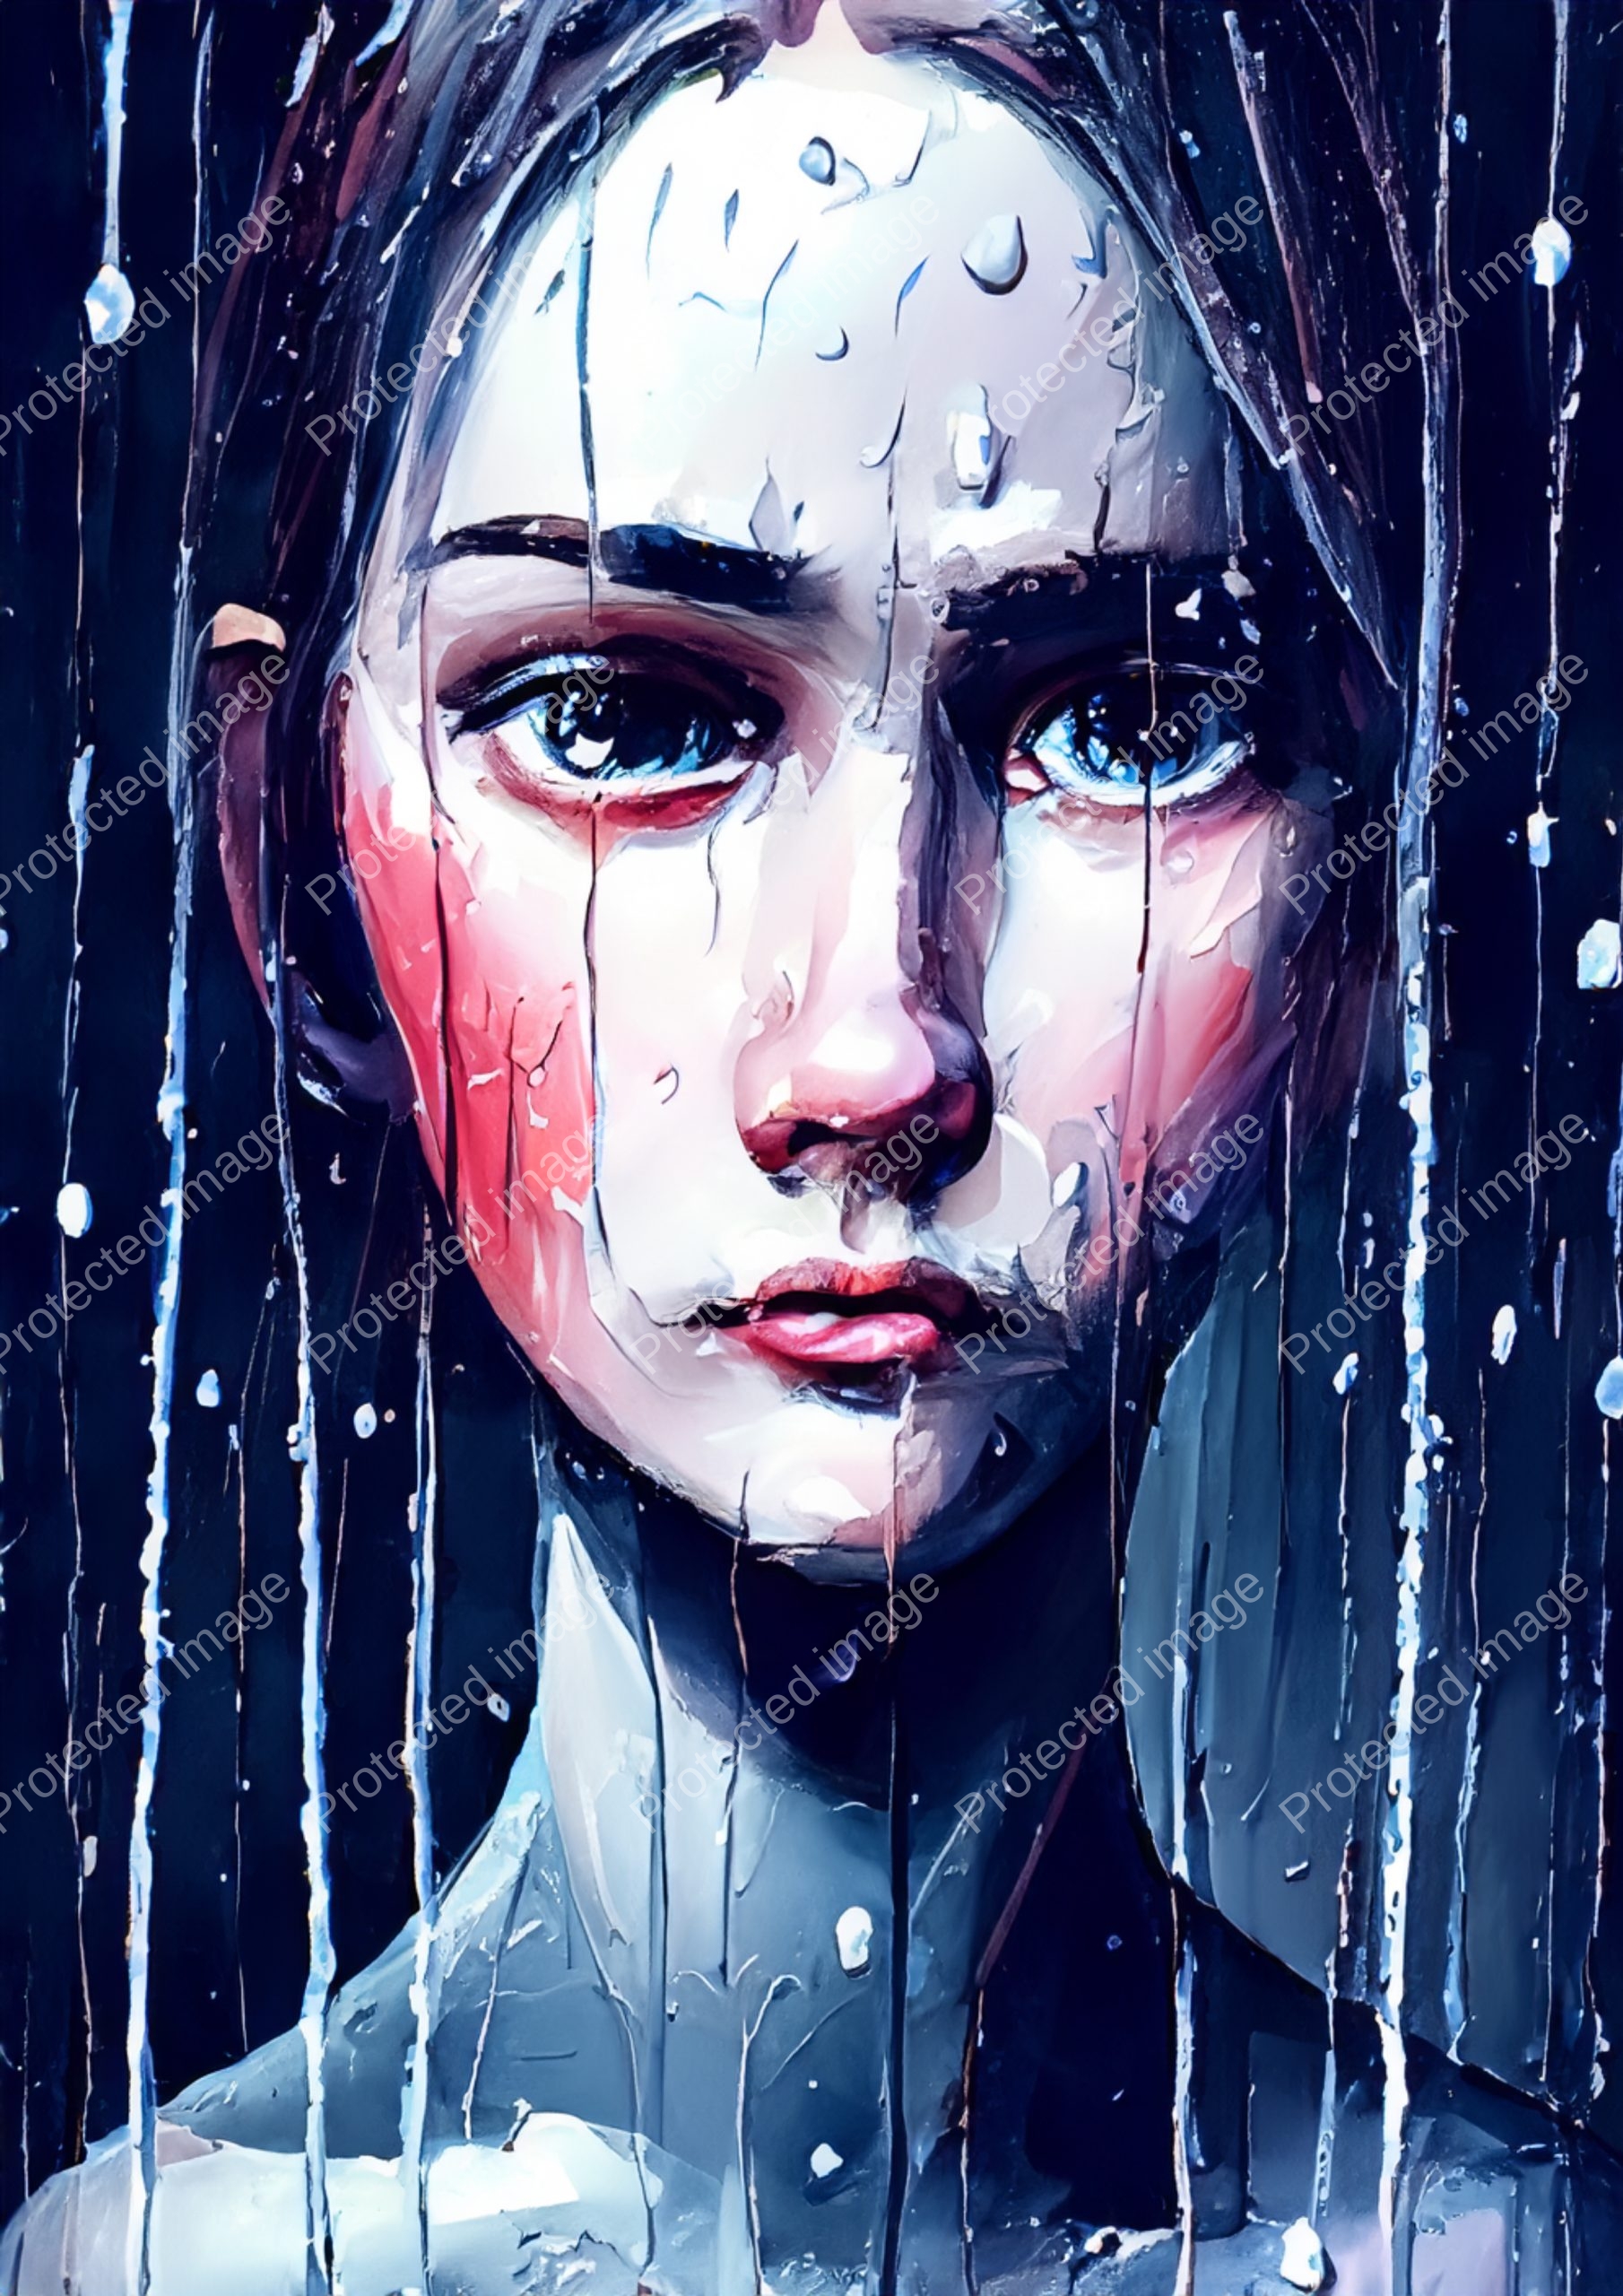 Girl Face in Thew Rain